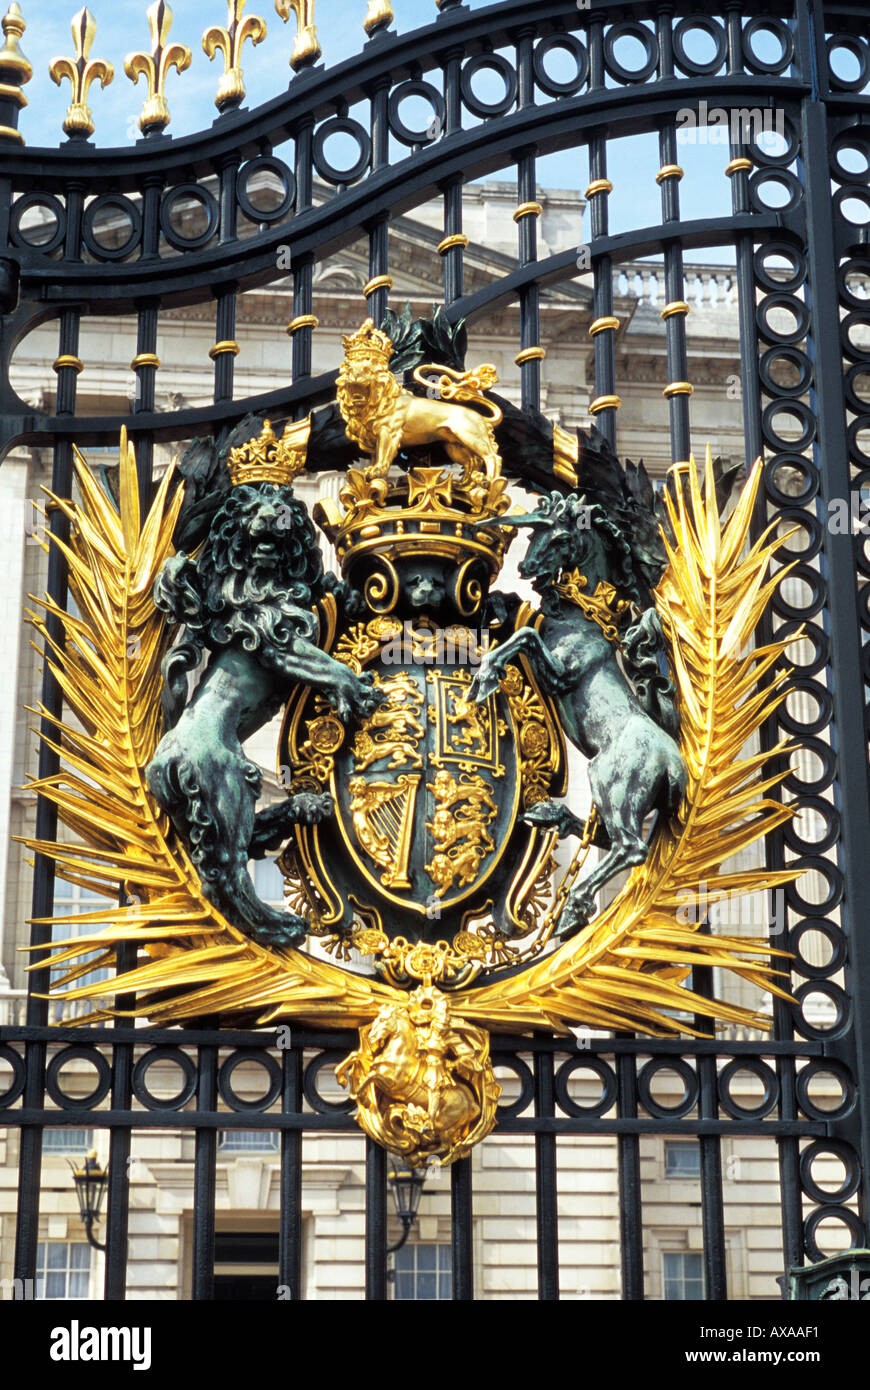 Royal Crest on Gates in front of Buckingham Palace London England Stock Photo